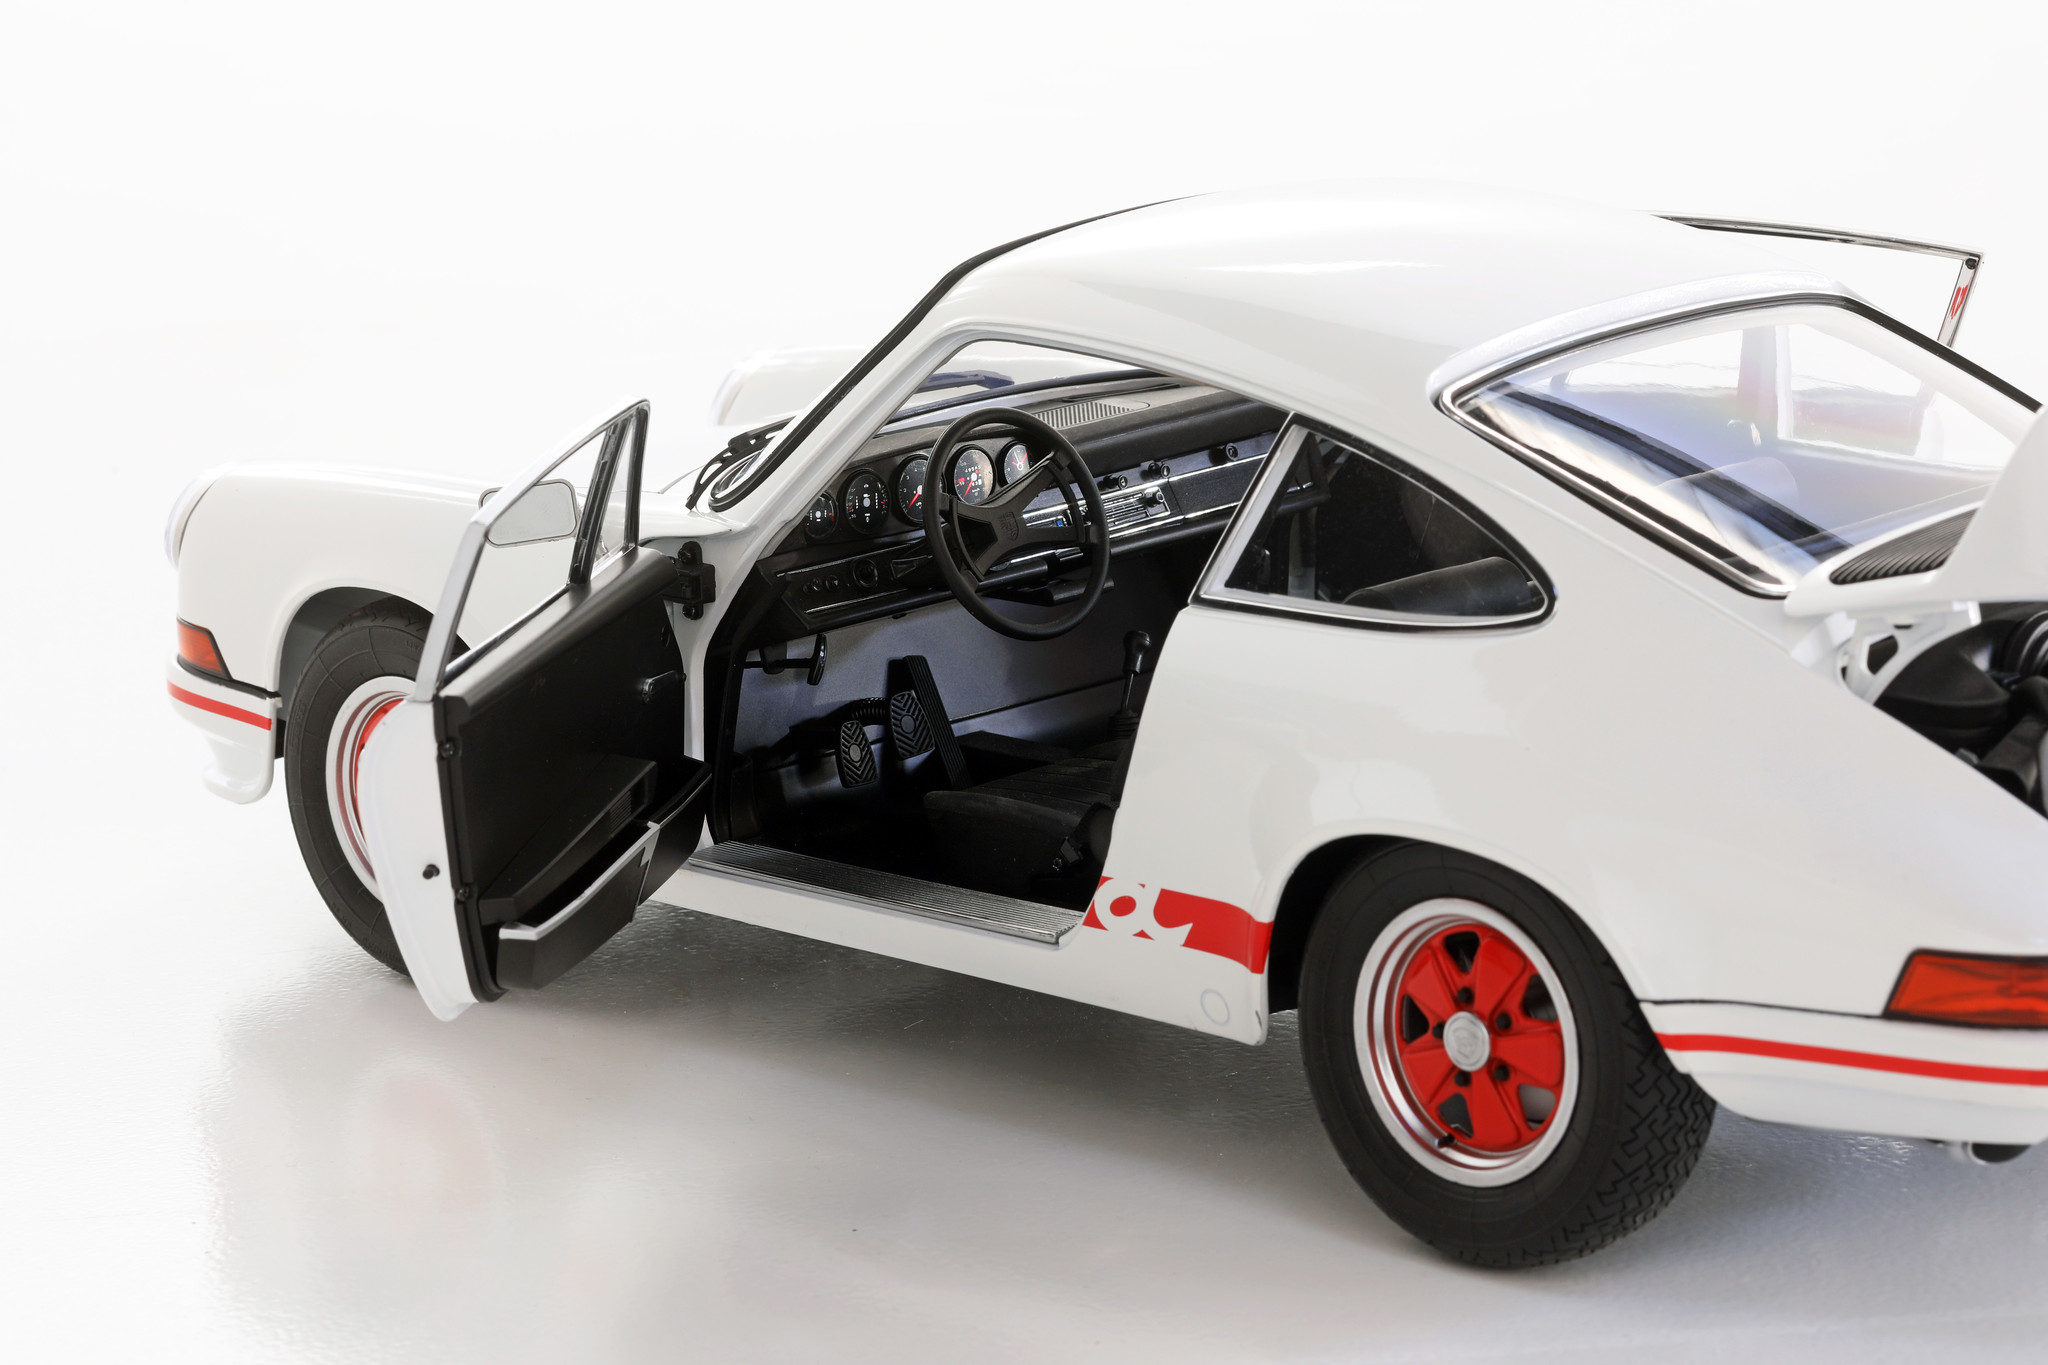 Scale model Porsche RS 1:8